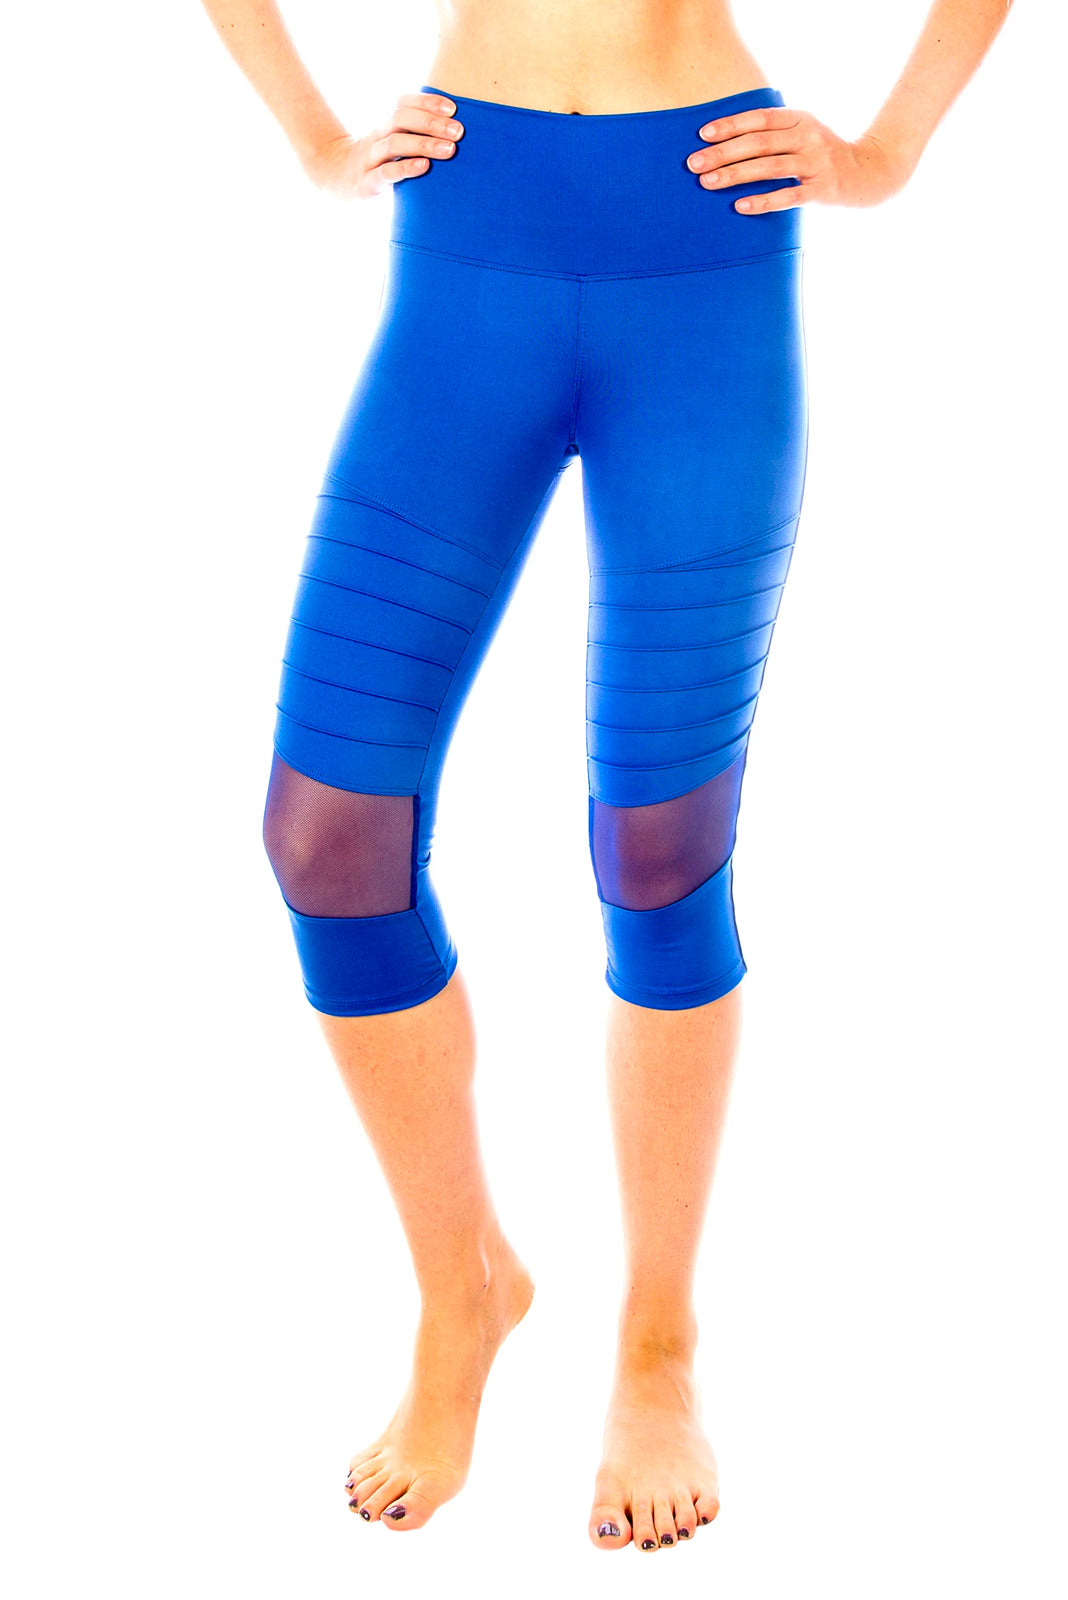 Capri Yoga Pants, Fun Workout Capris, Colorful Capris